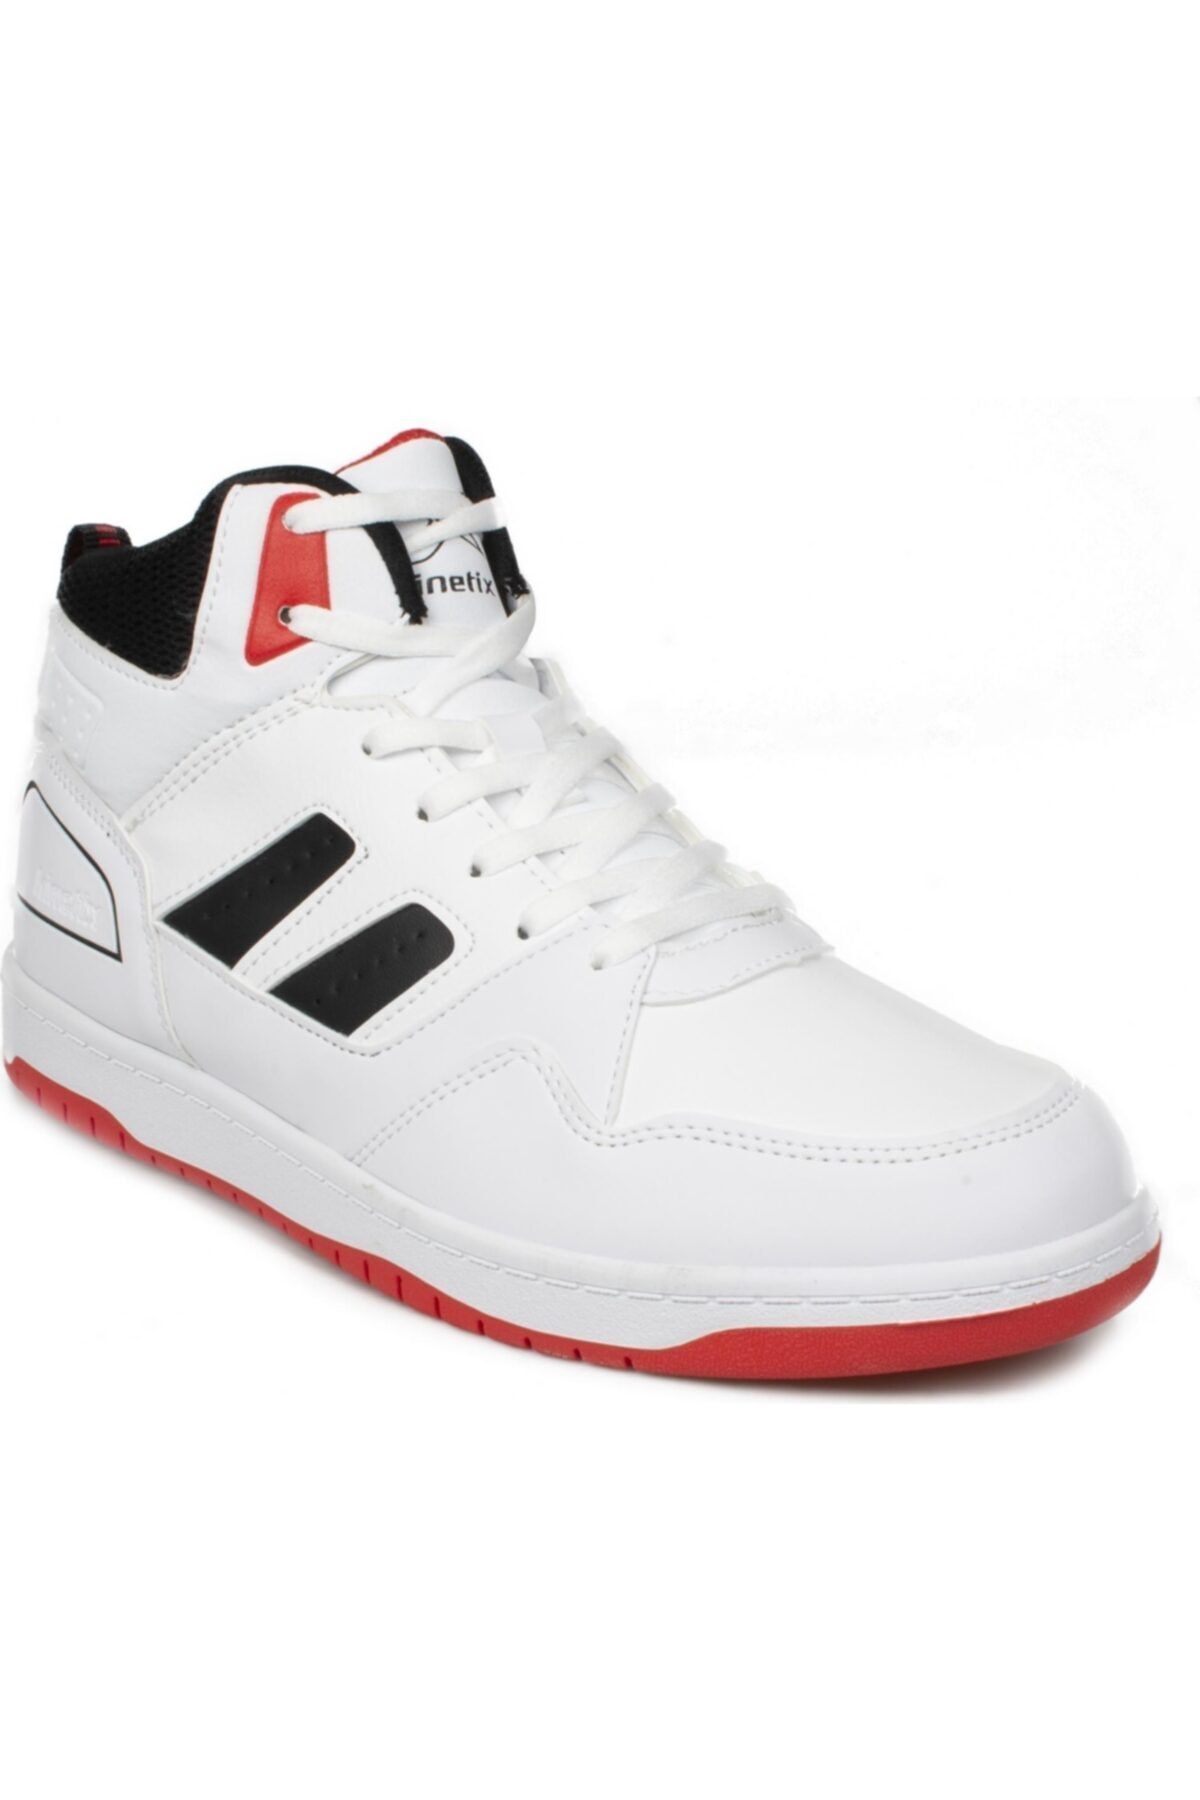 Kinetix GINA M 1FX Beyaz Erkek Sneaker Ayakkabı 100662018